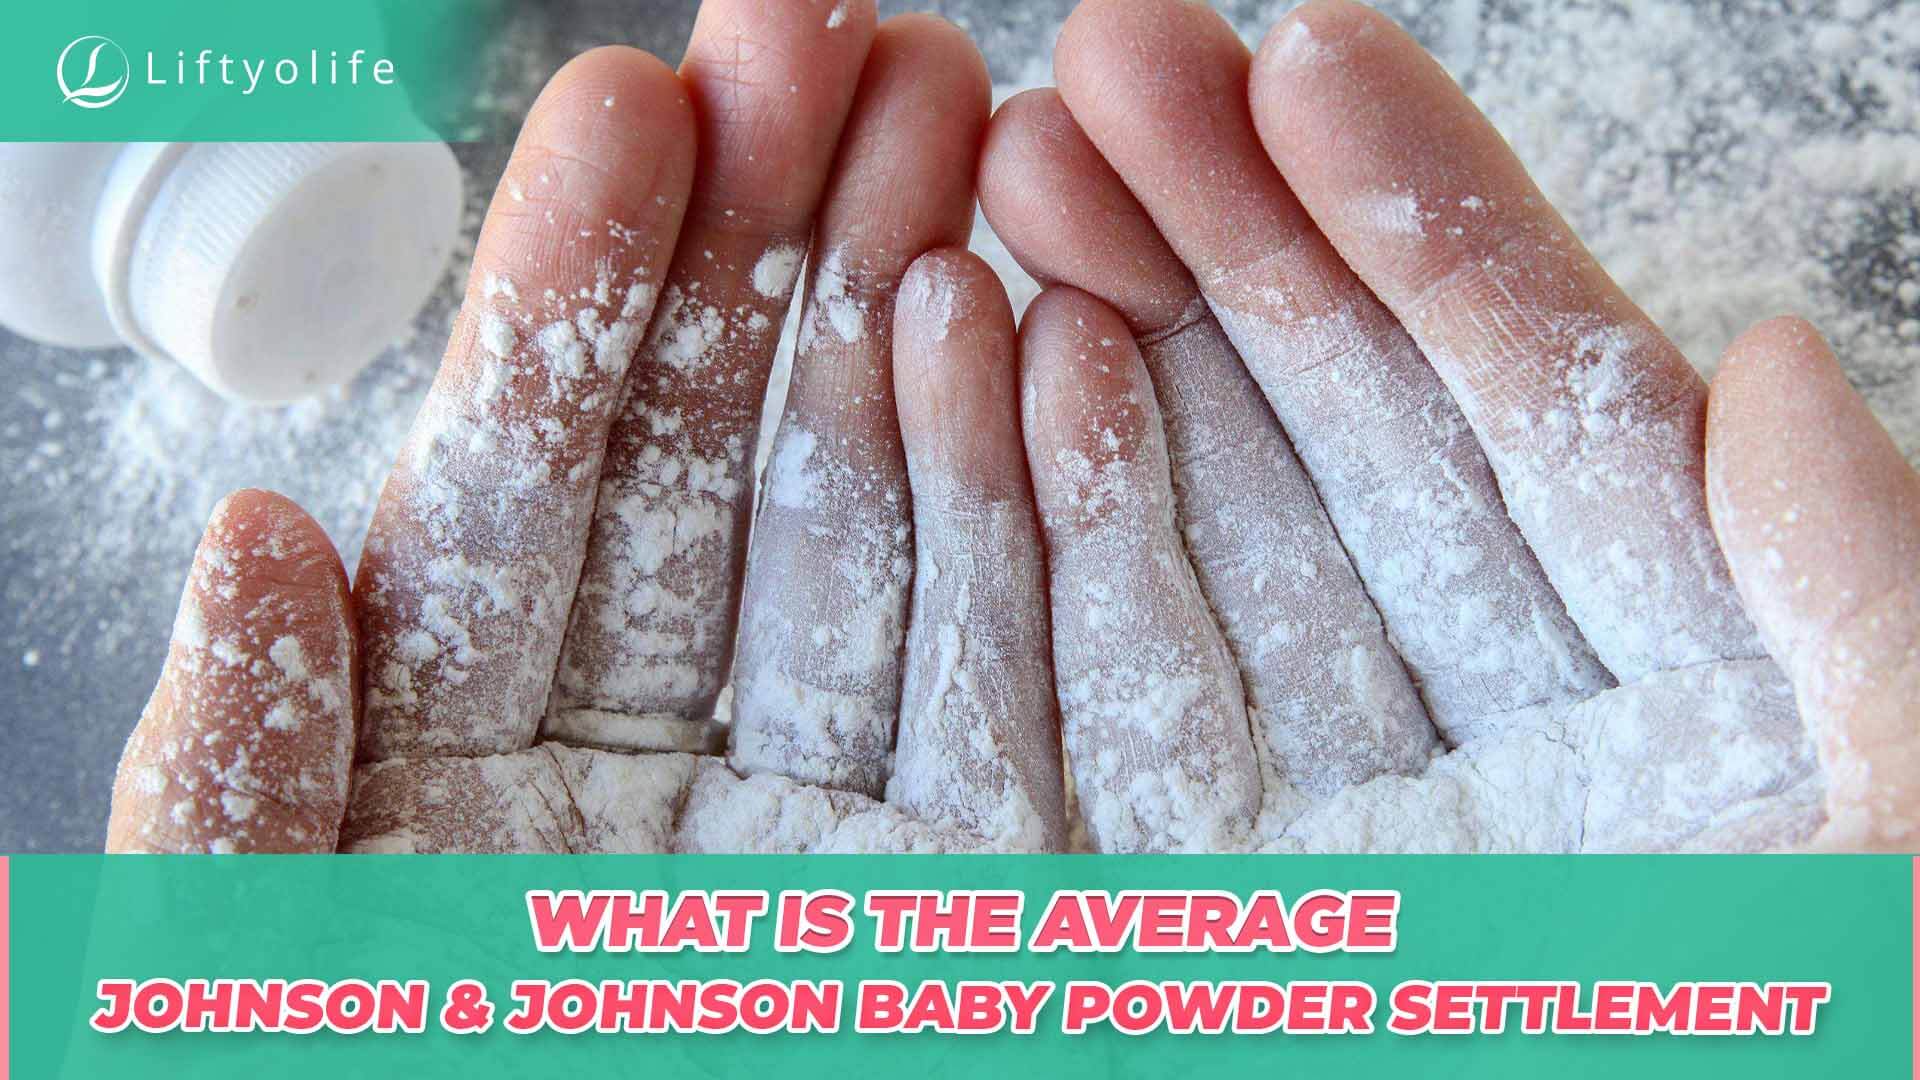 What Is The Average Johnson & Johnson Baby Powder Settlement?